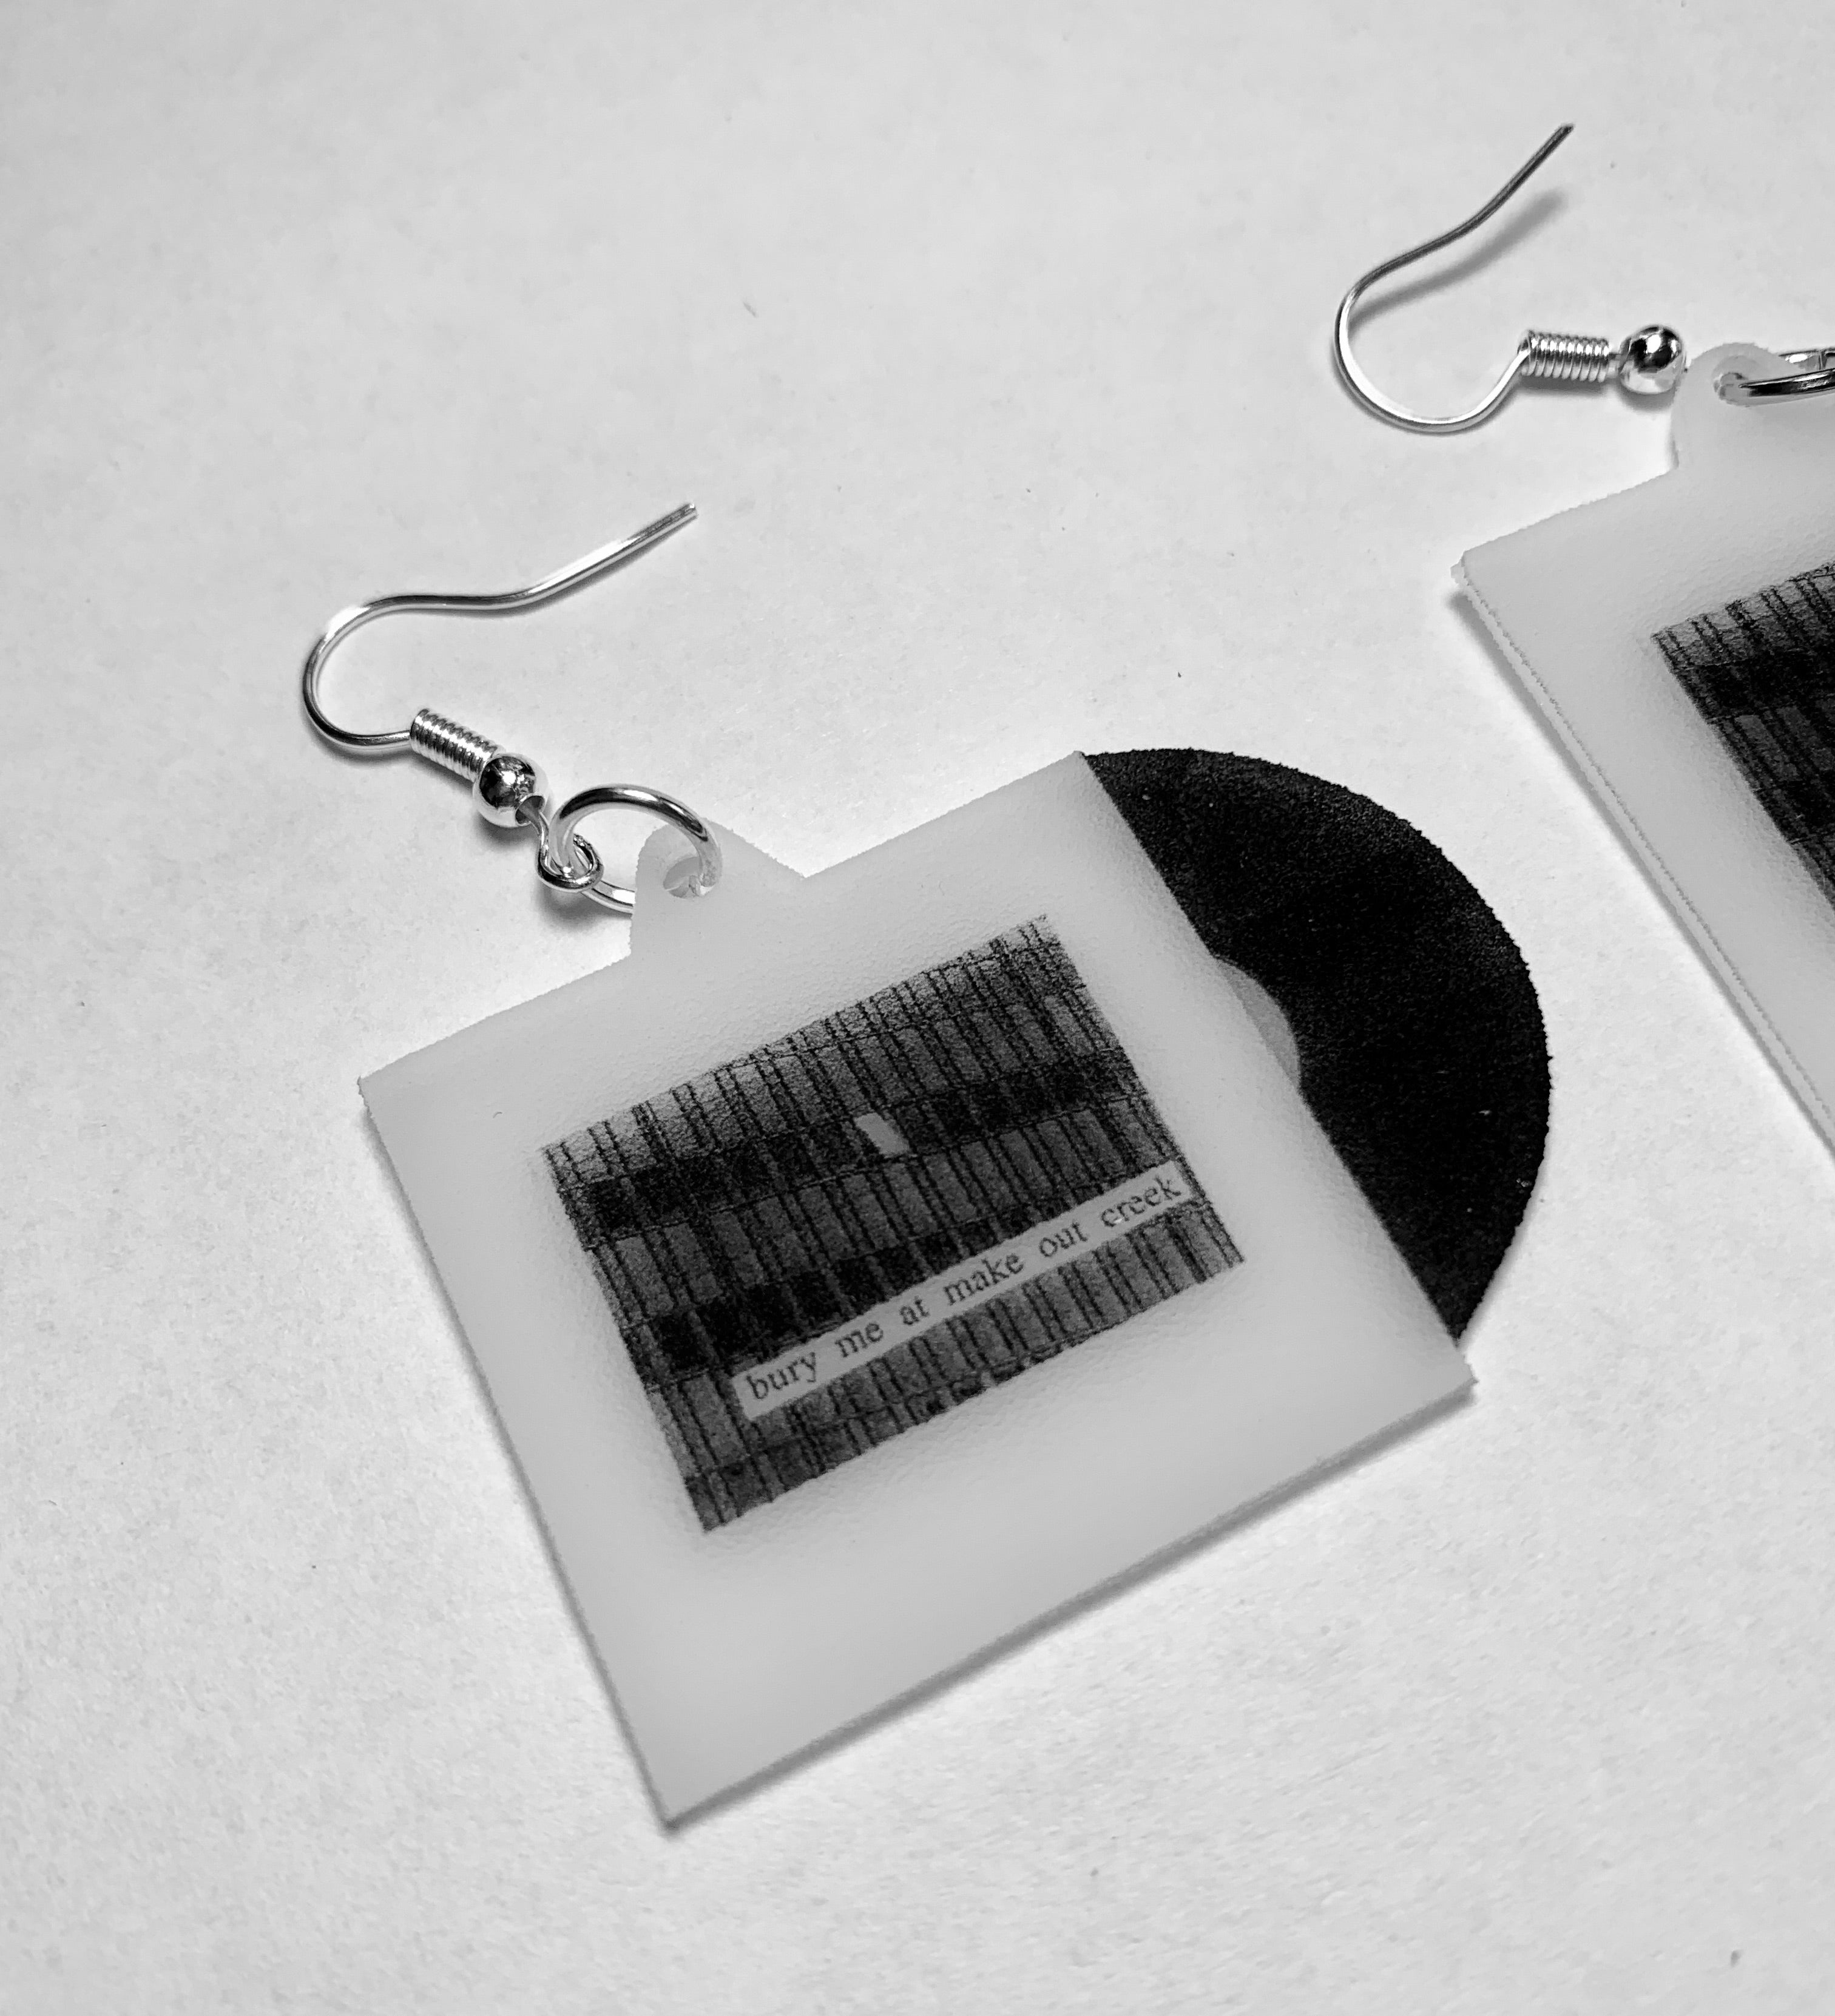 Mitski Bury Me at Make Out Creek Vinyl Album Handmade Earrings!